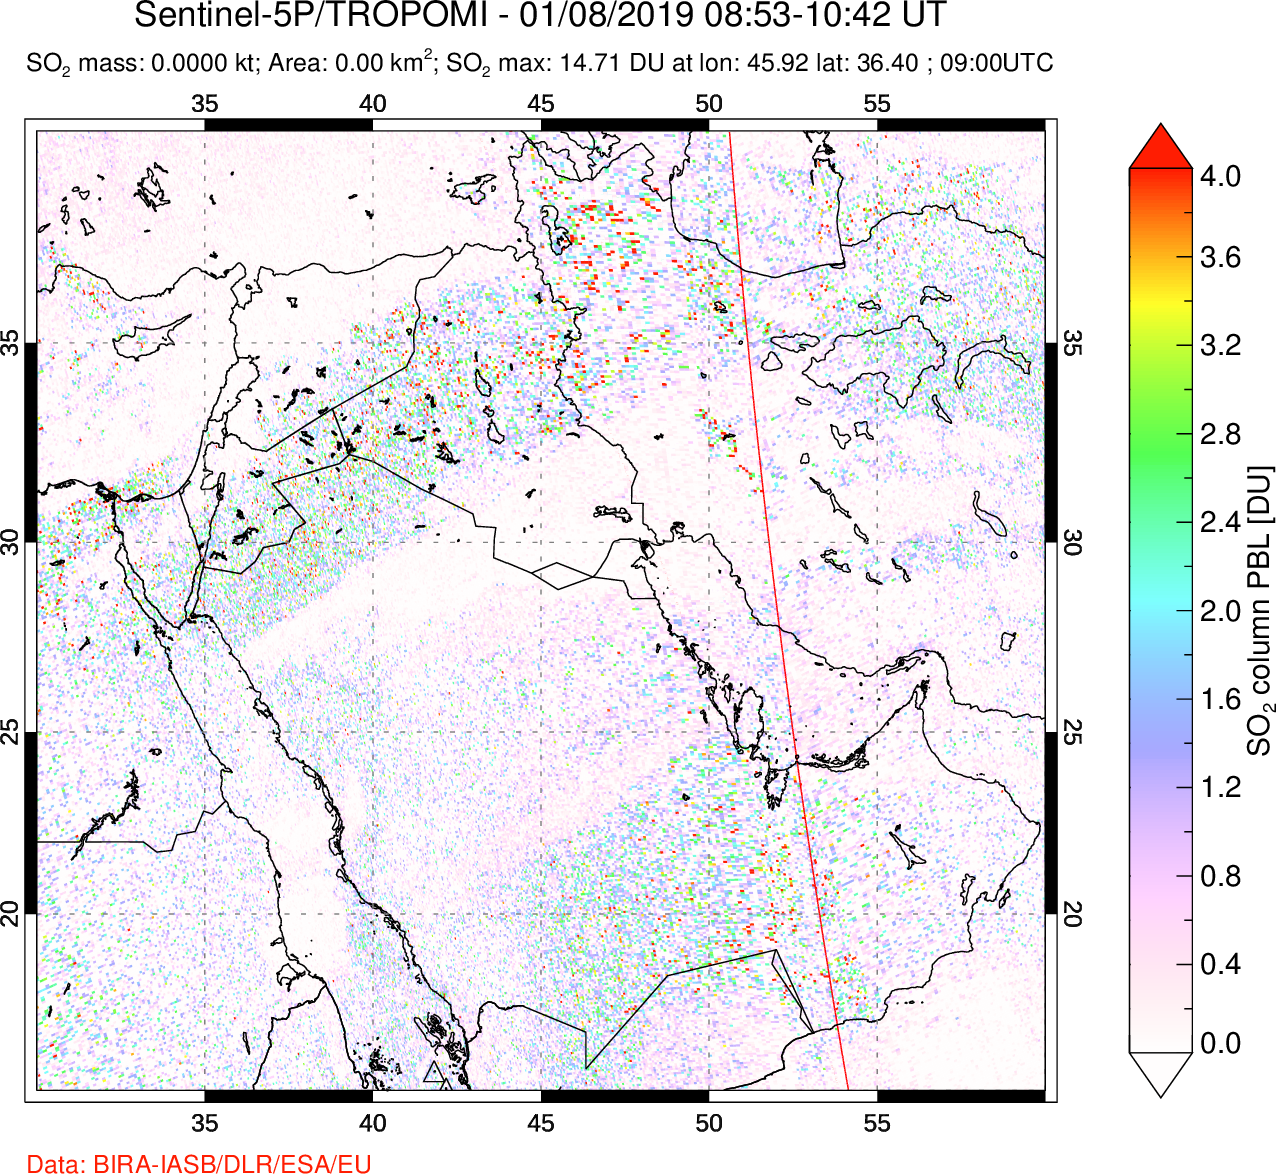 A sulfur dioxide image over Middle East on Jan 08, 2019.